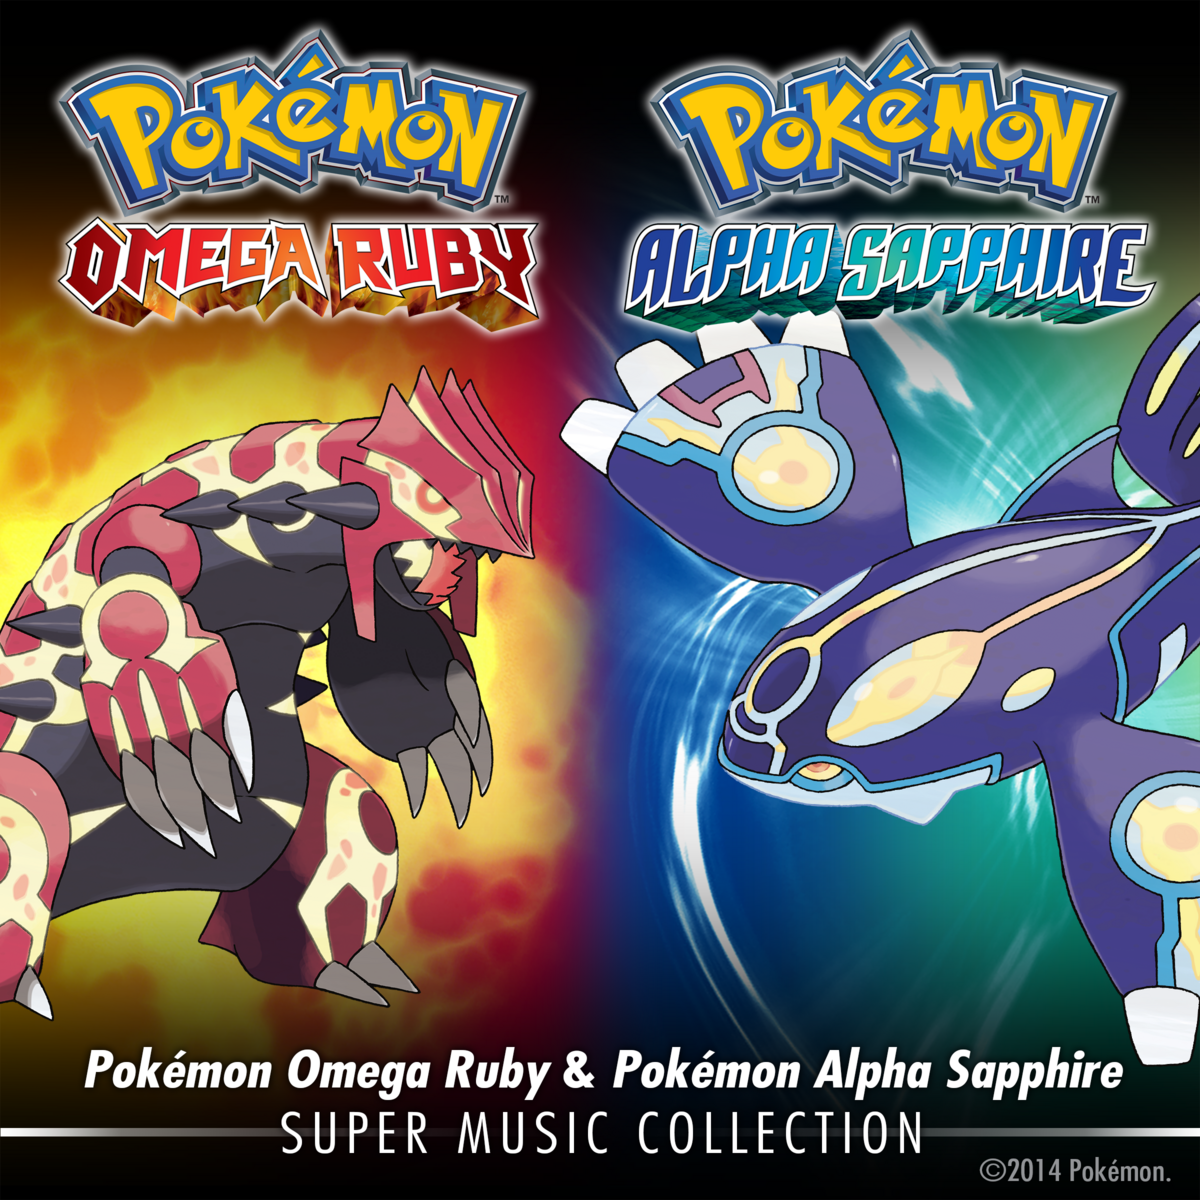 Pokémon Omega Ruby & Pokémon Alpha Sapphire: Super Music